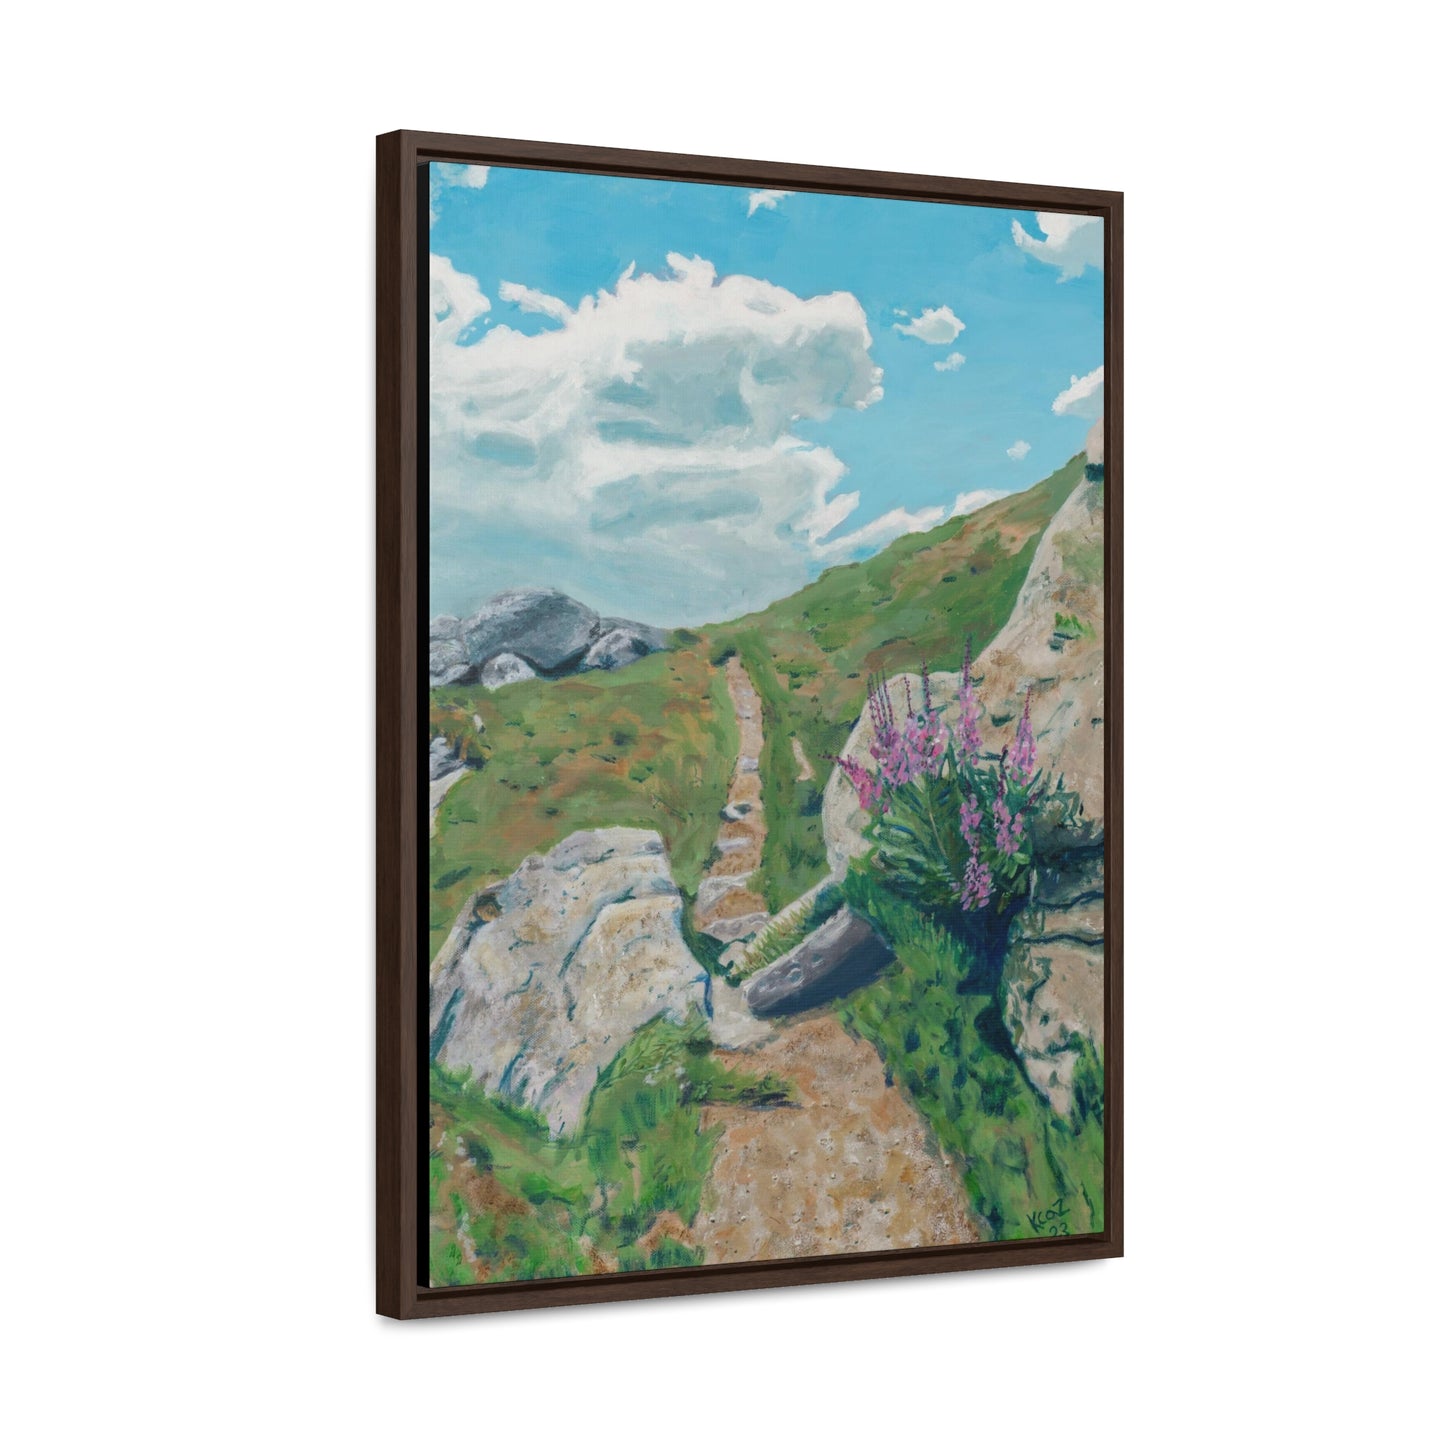 Framed canvas